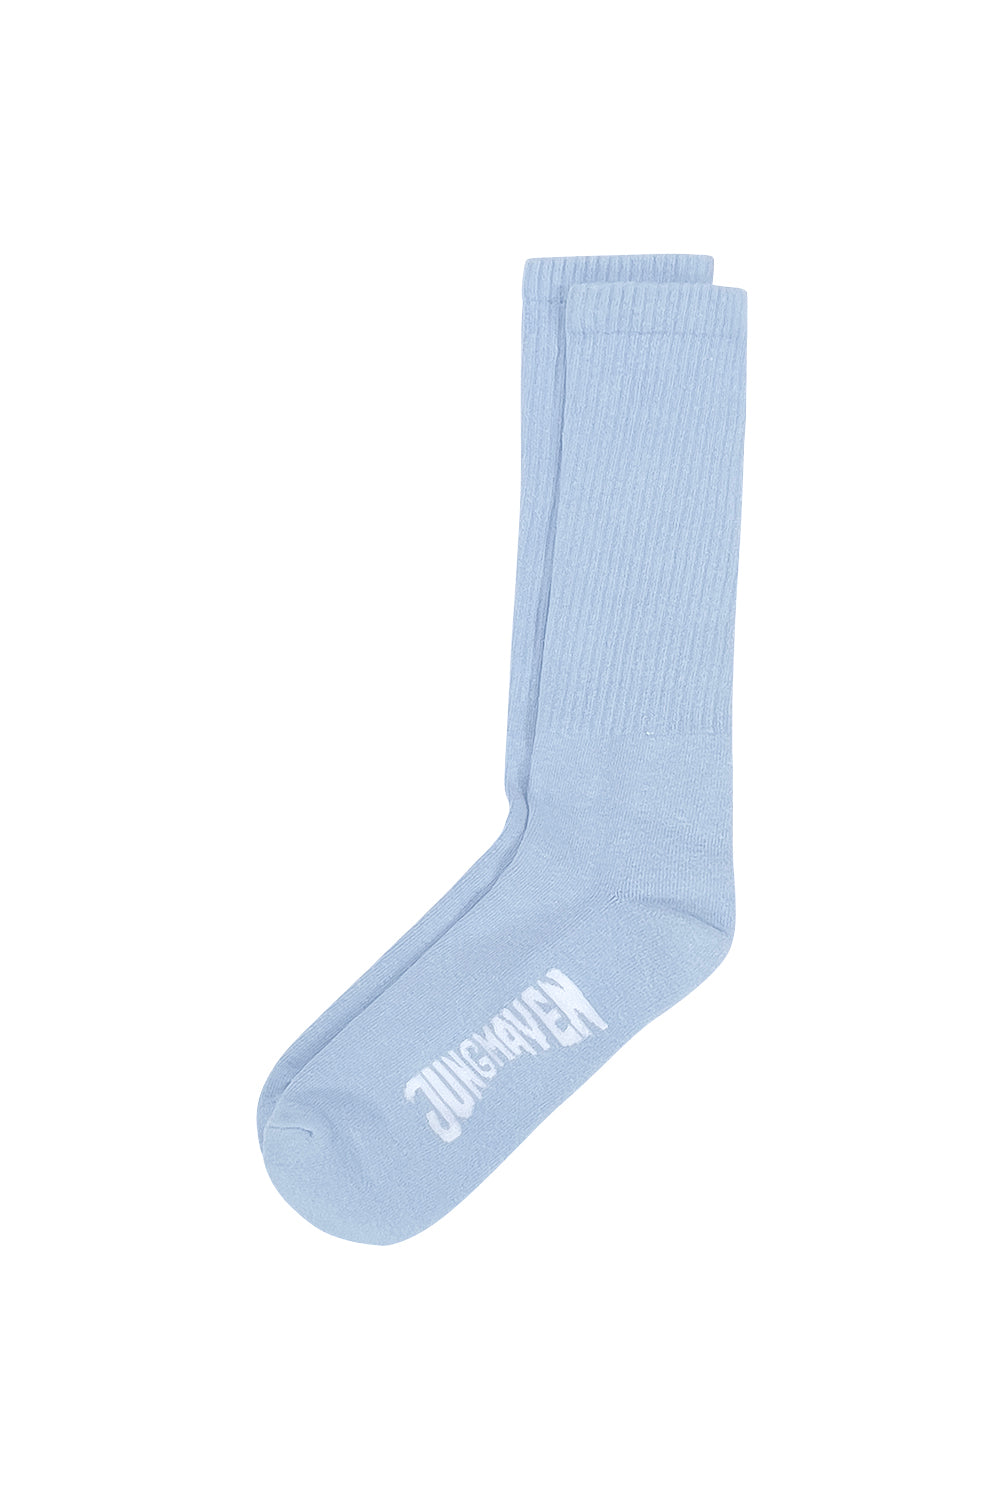 Hemp Crew Socks | Jungmaven Hemp Clothing & Accessories / Color: Coastal Blue